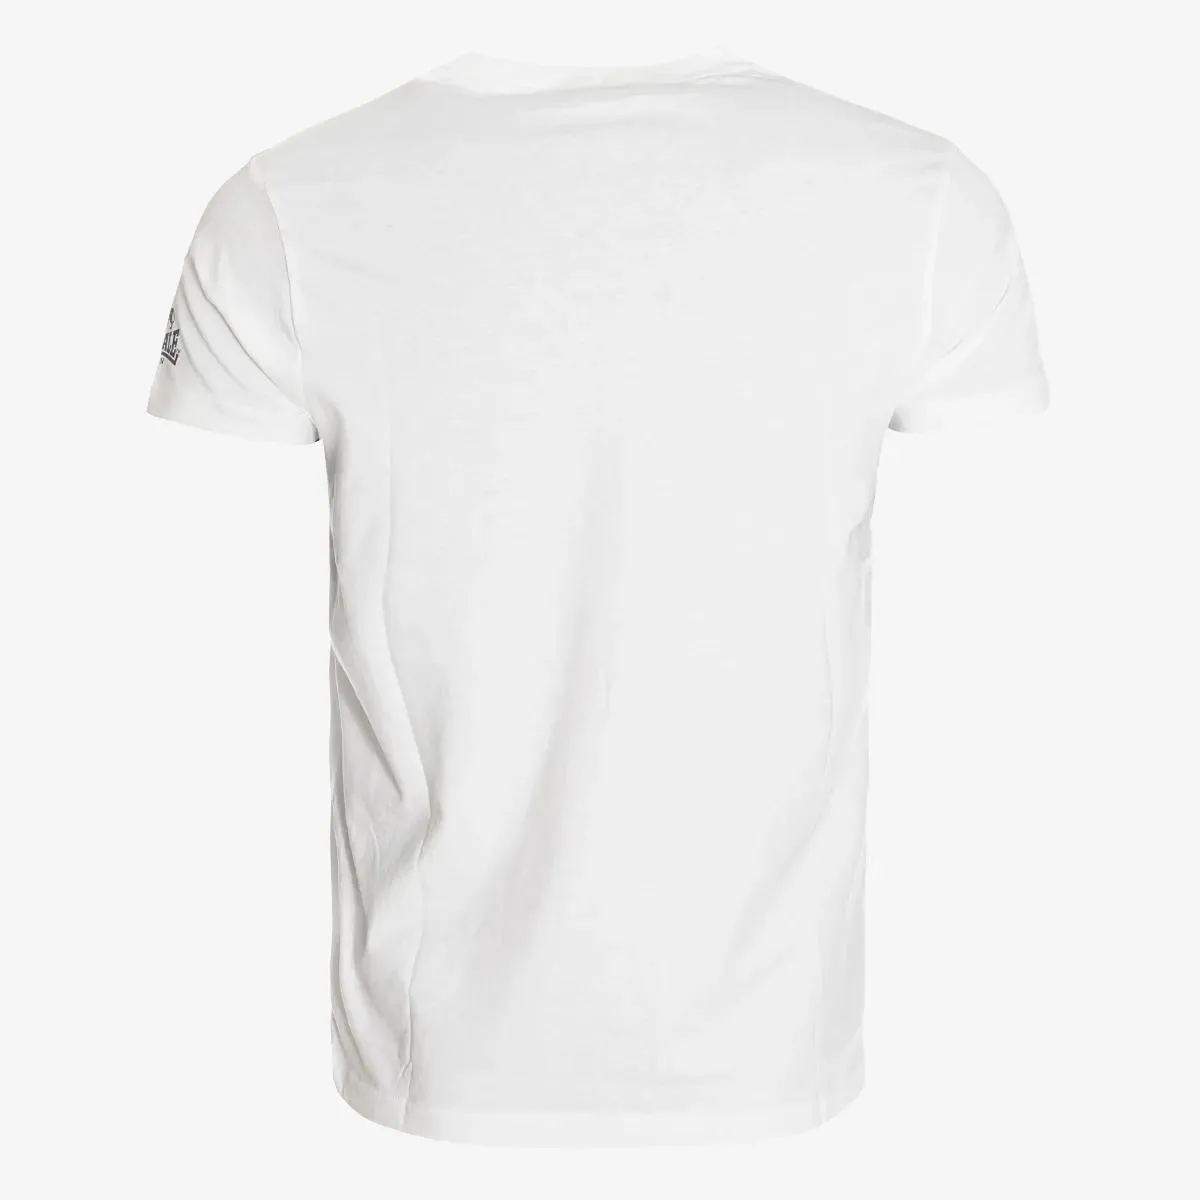 Lonsdale T-shirt 60' 